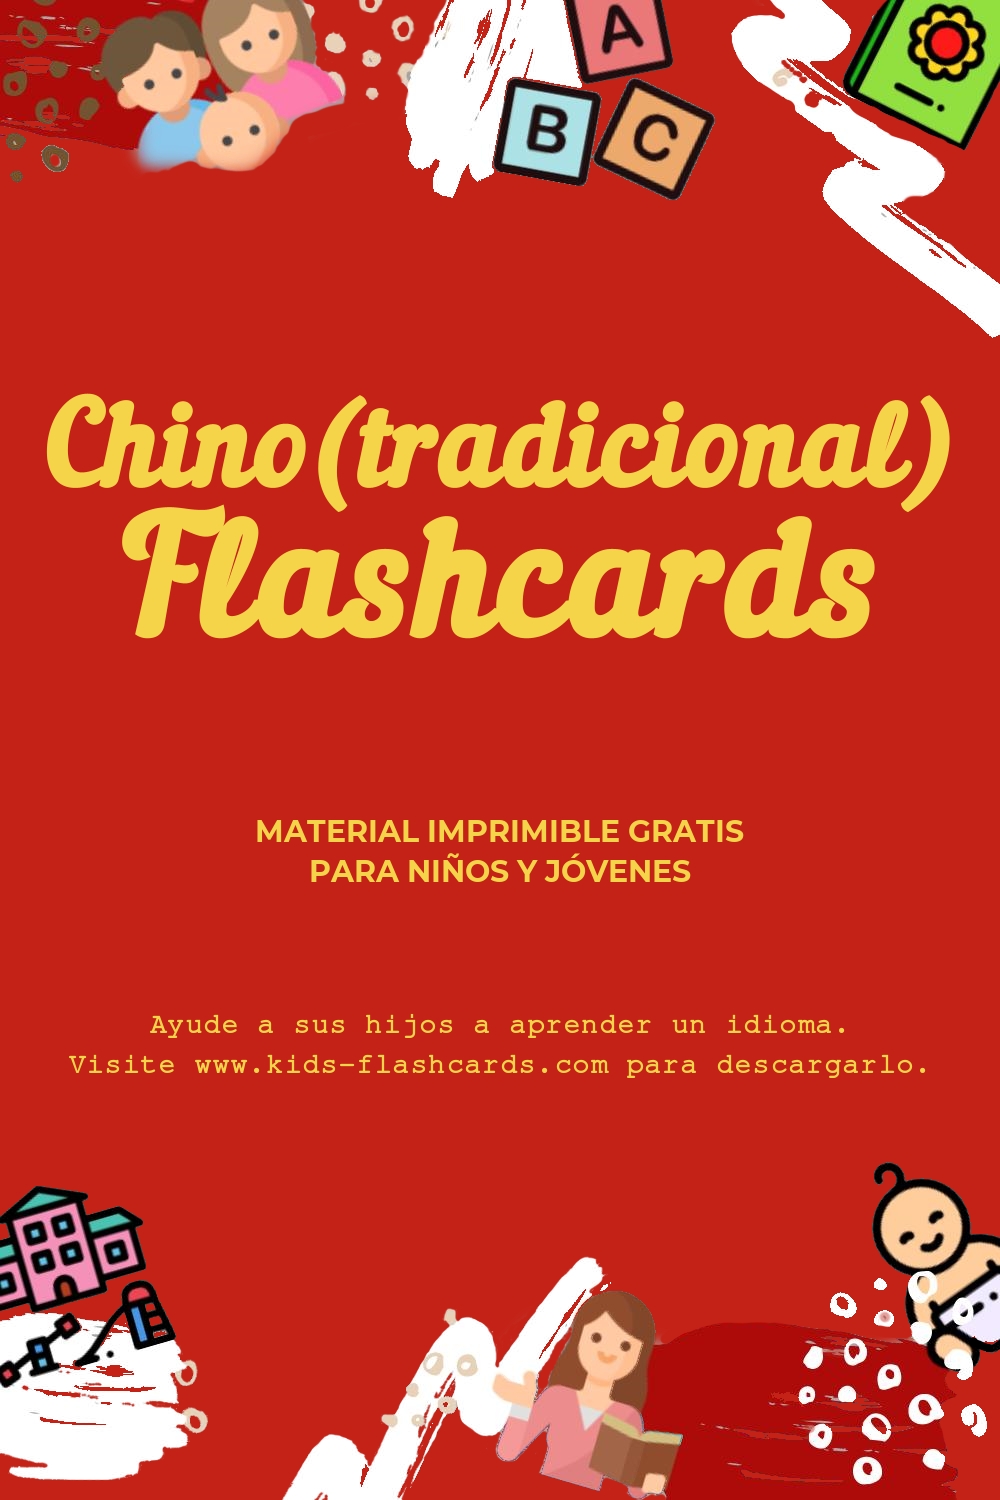 Fichas para aprender Chino(tradicional)